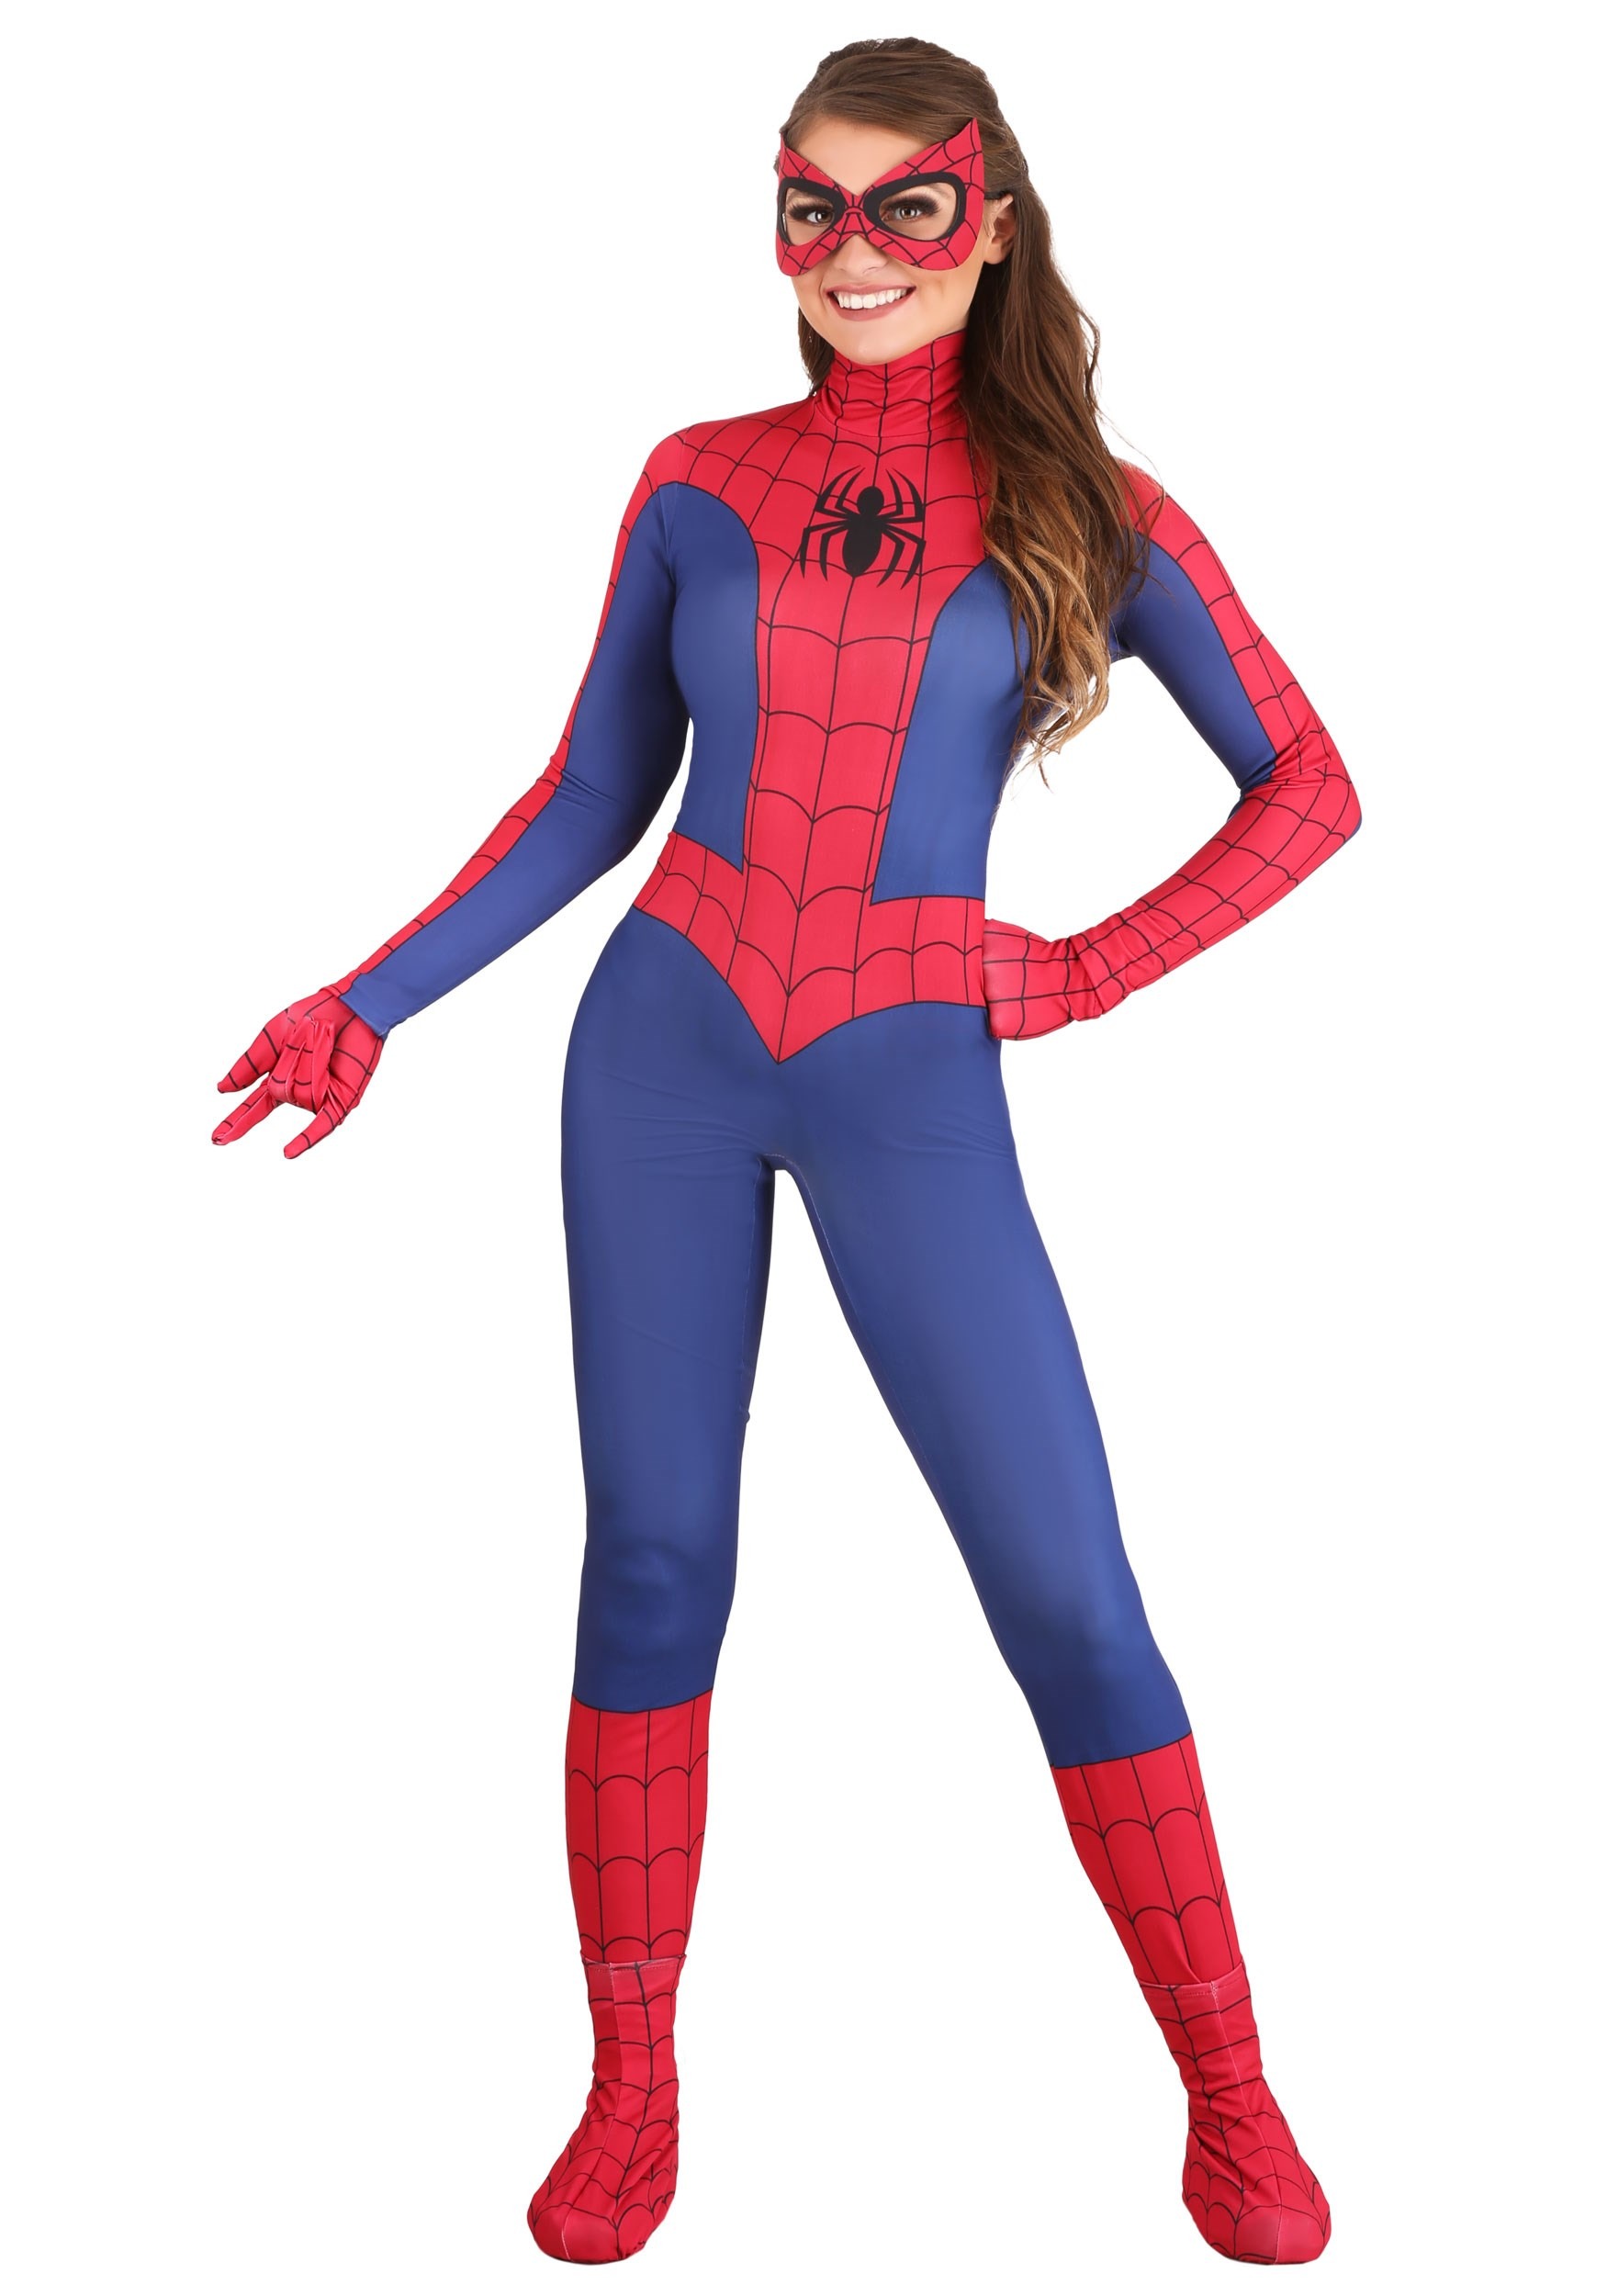 Spider-Man Costume for Women | Spider Girl Costume